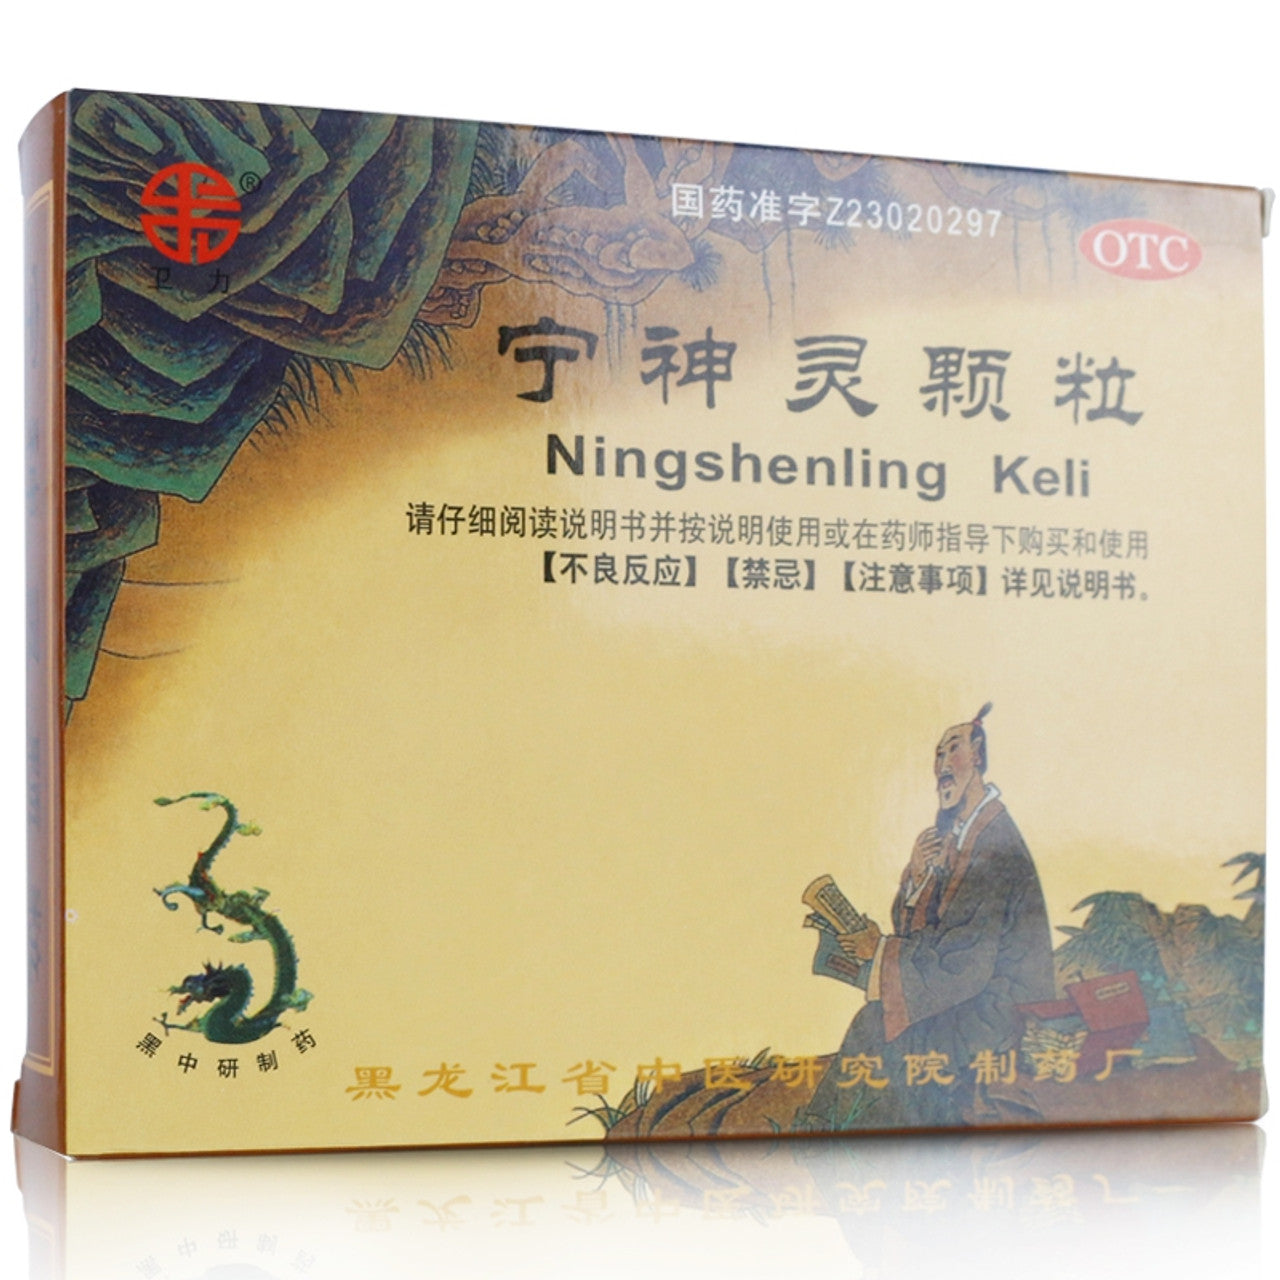 China Herb. Brand Weili. Ningshenling Keli or Ningshenling Granules or Ning Shen Ling Ke Li or Ning Shen Ling Granules for Insomnia.